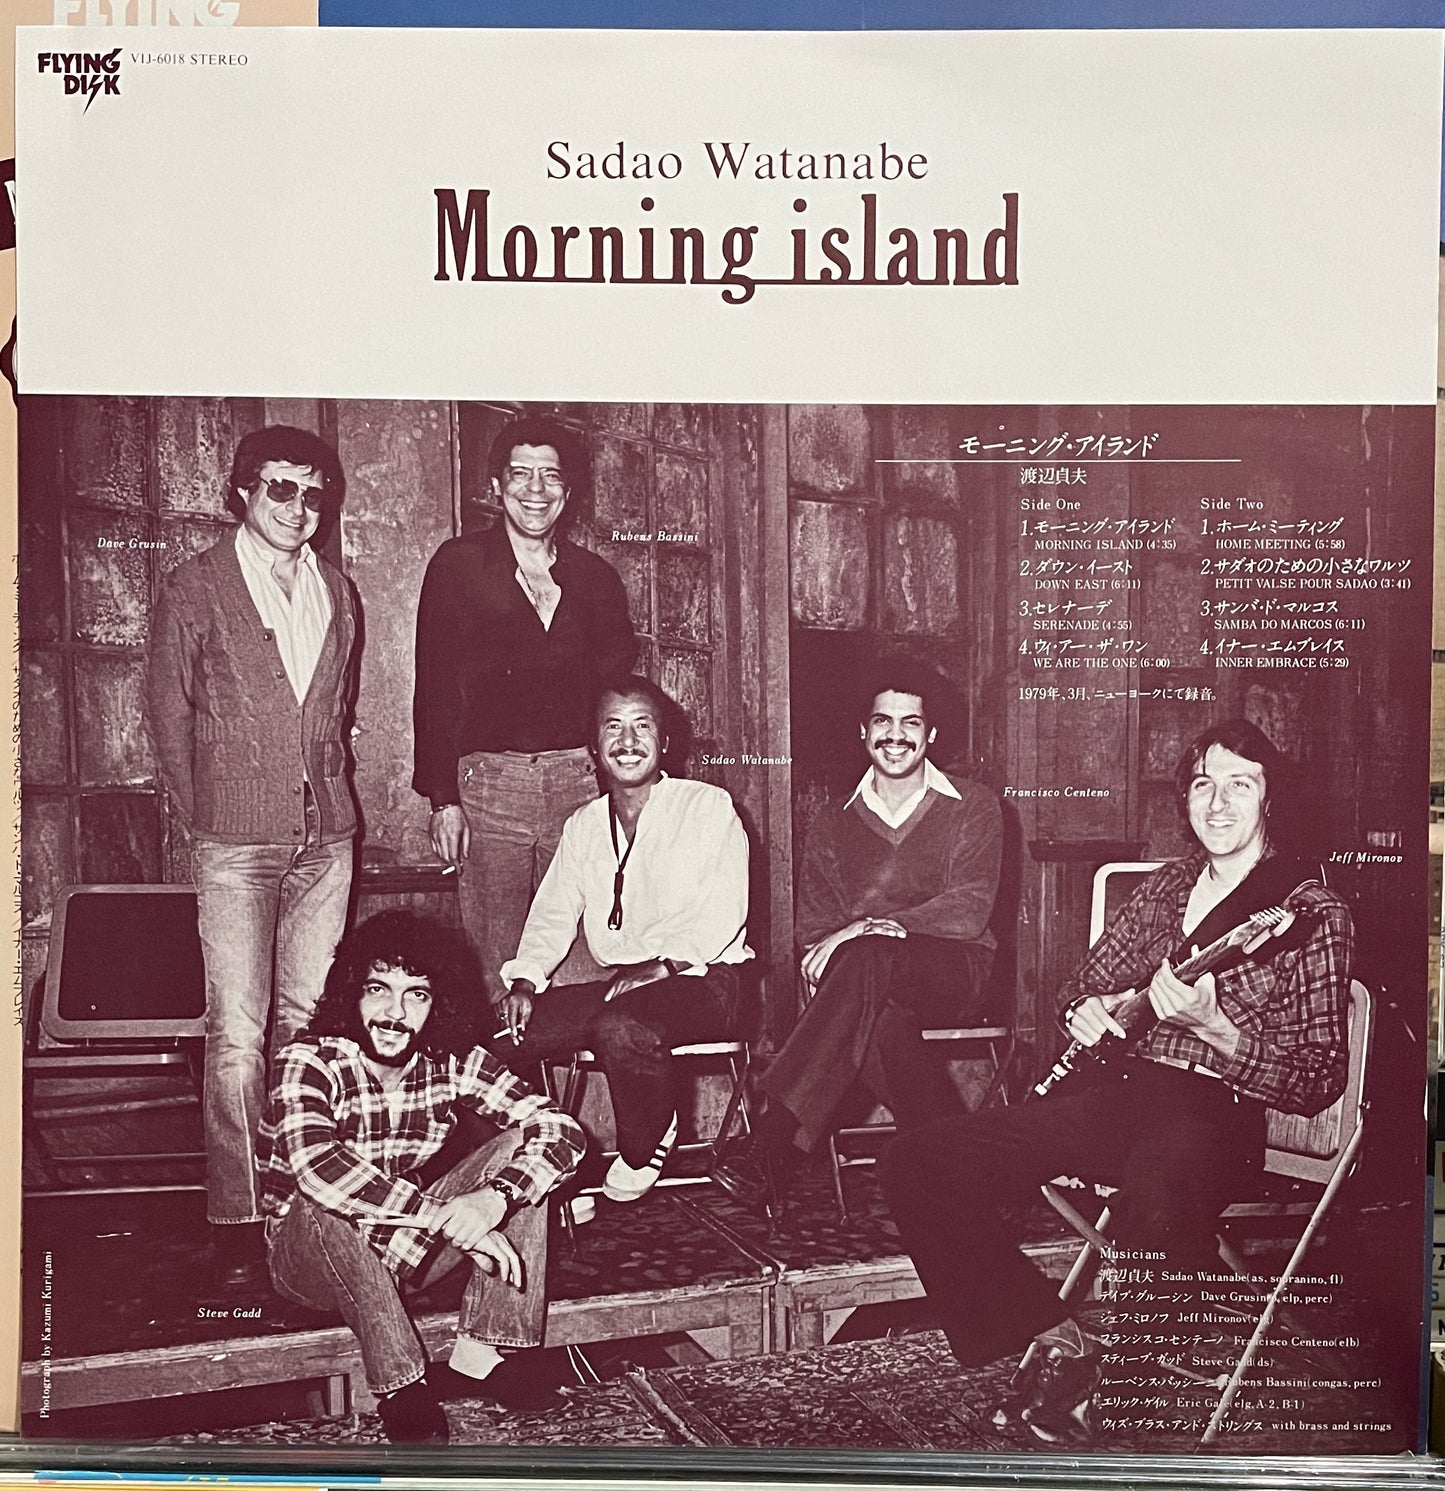 Sadao Watanabe “Morning Island” (1979)